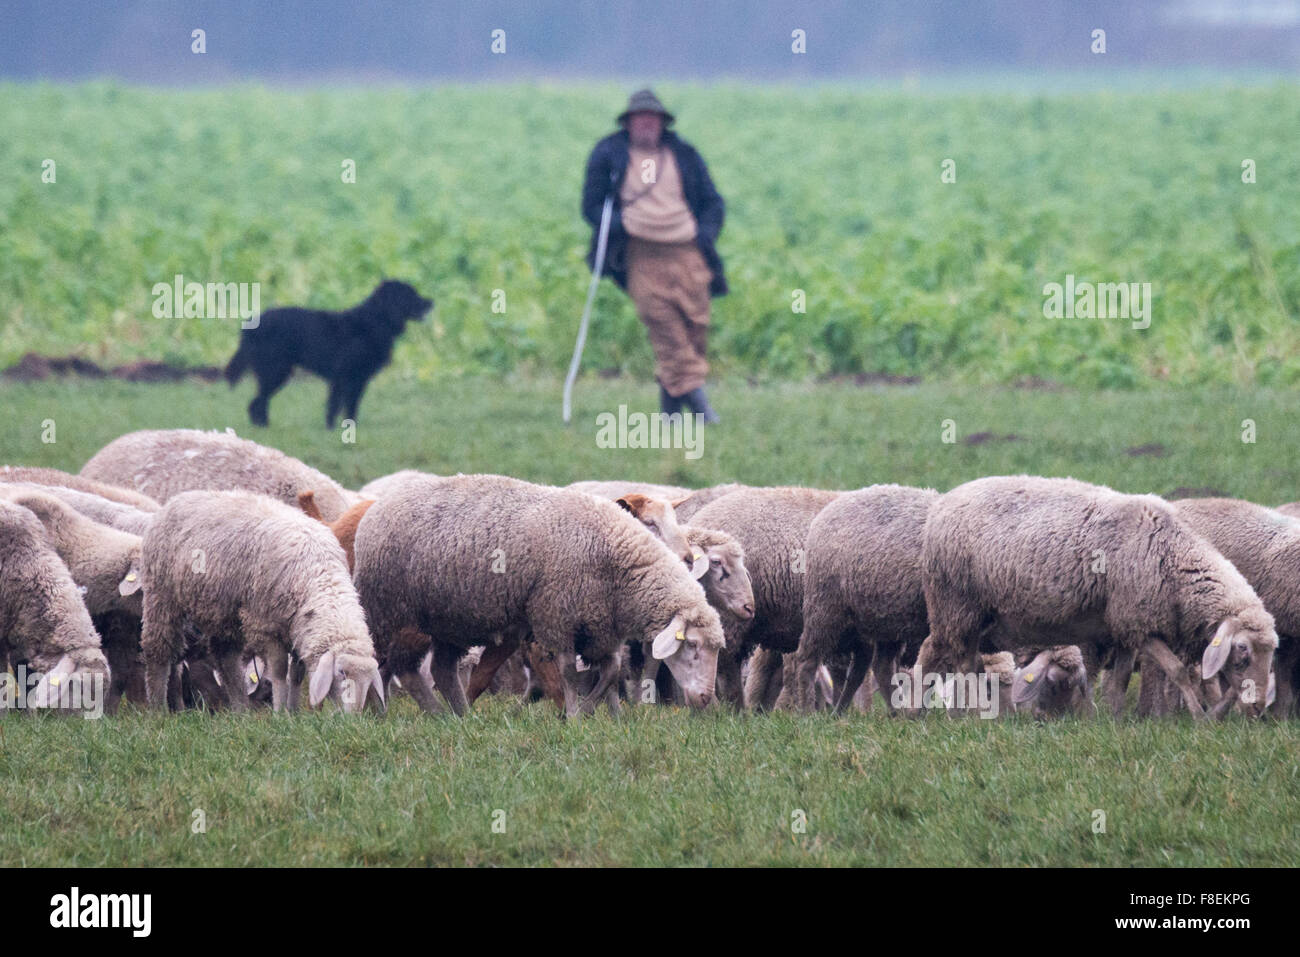 Weng, Alemania. 08 dic, 2015. Las ovejas pastan en un campo cerca de Weng, Alemania, 08 de diciembre de 2015. Foto: ARMIN WEIGEL/dpa/Alamy Live News Foto de stock